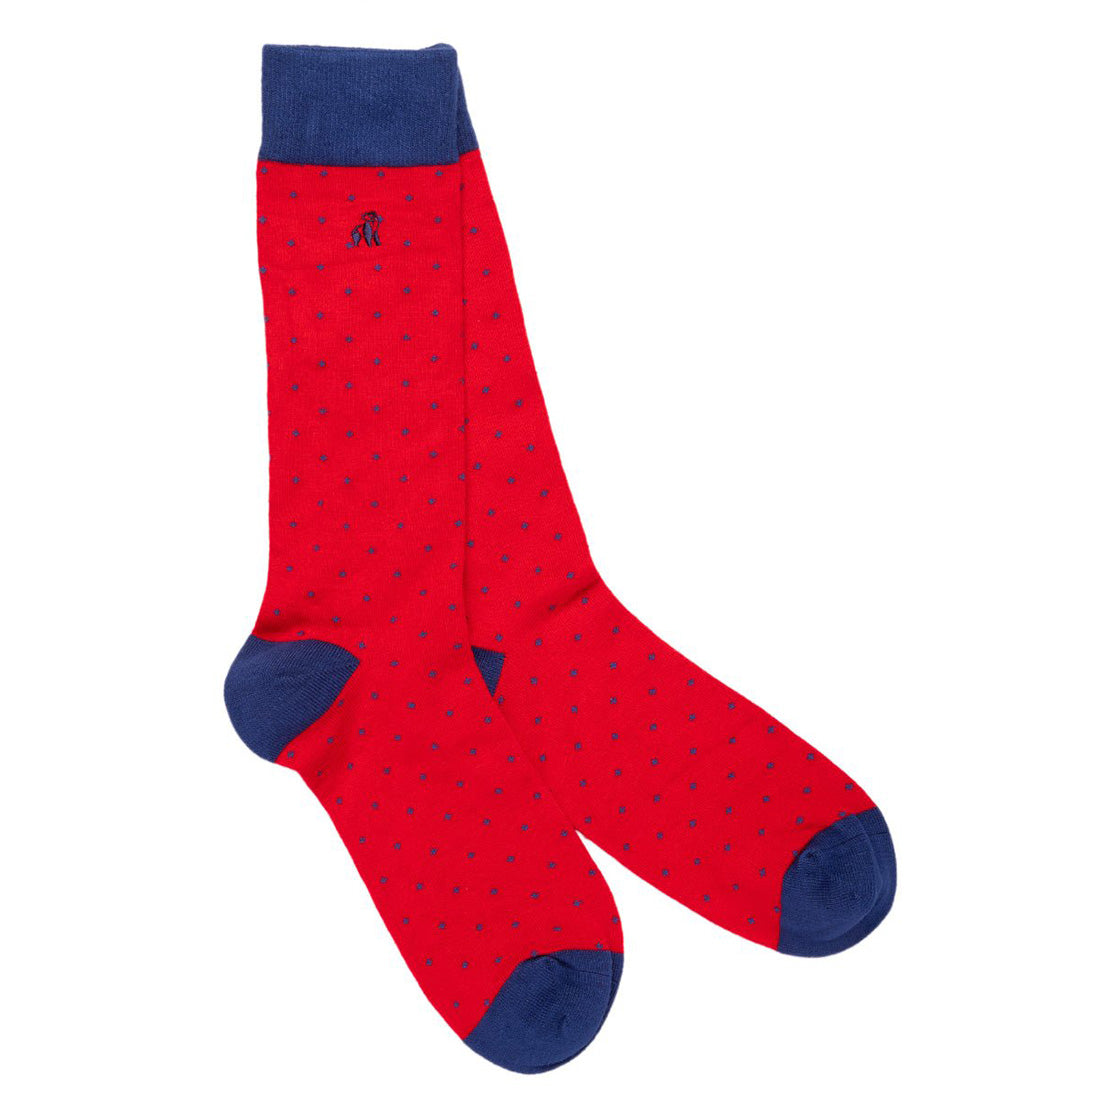 socks-spotted-red-bamboo-socks-comfort-cuff-1.jpg